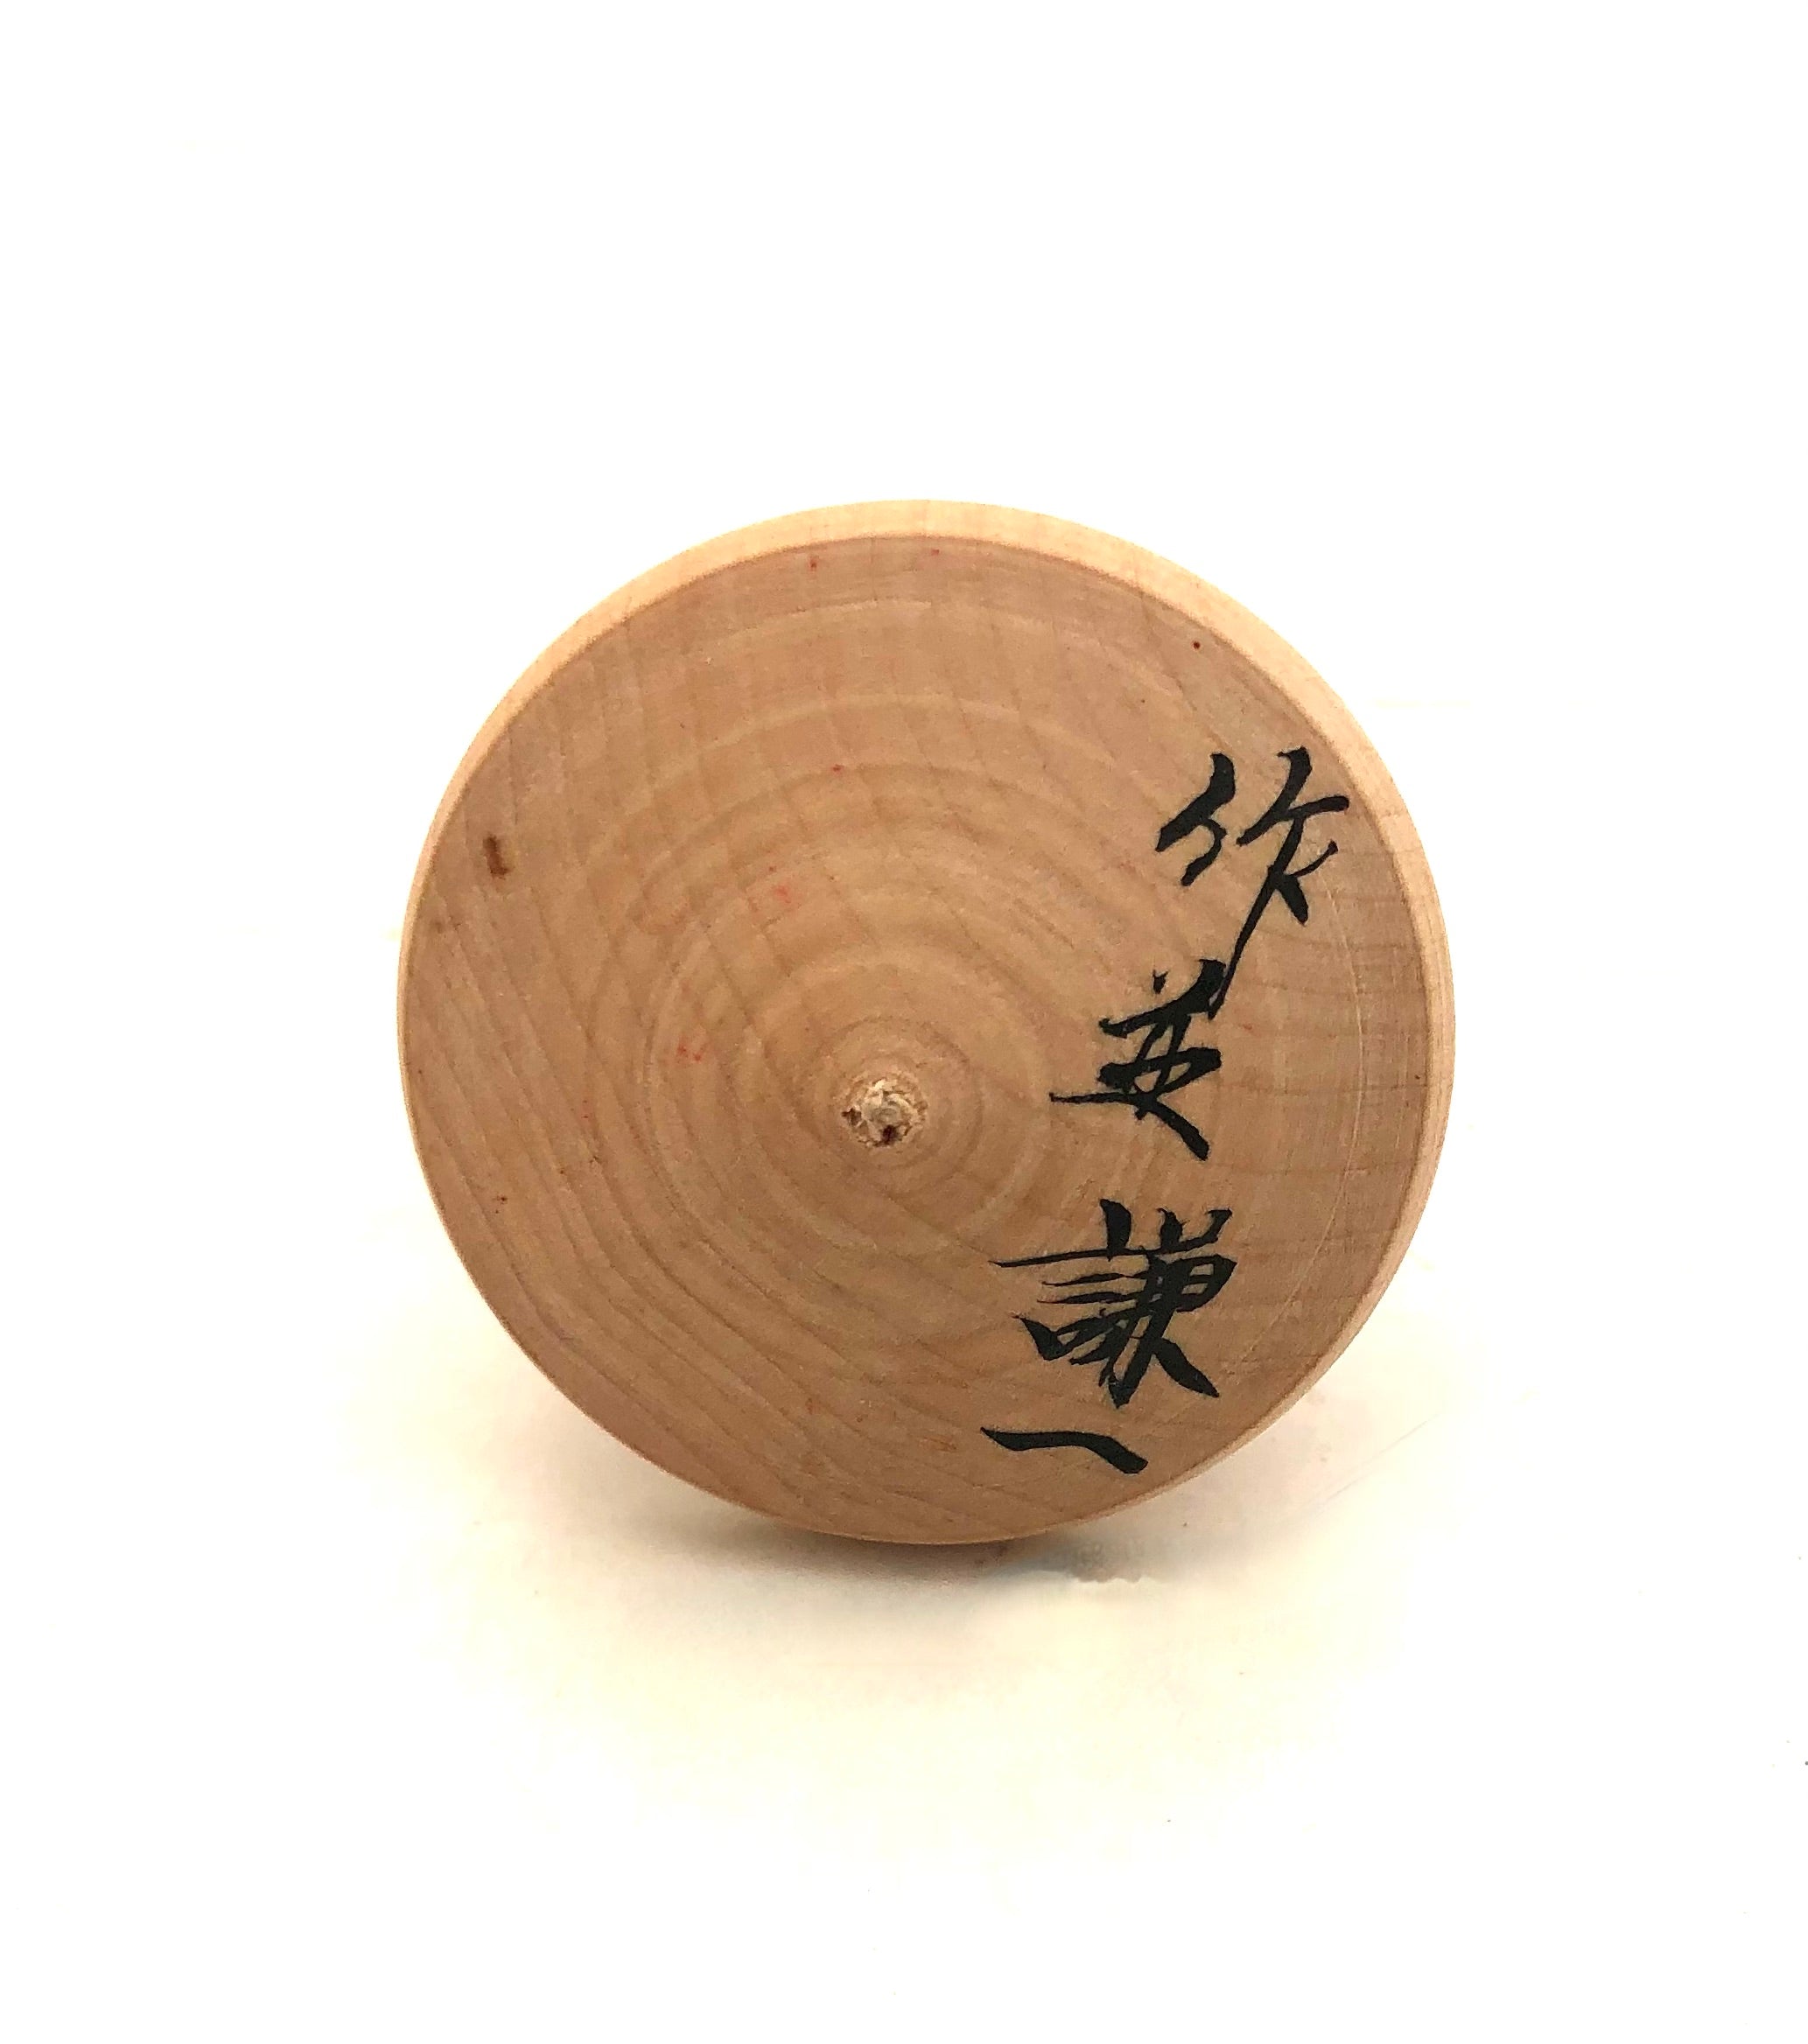 Vintage Japanese Miniature Traditional Kokeshi Sakunami Family Spinning Top (Koma) by Hiraga Kenichi